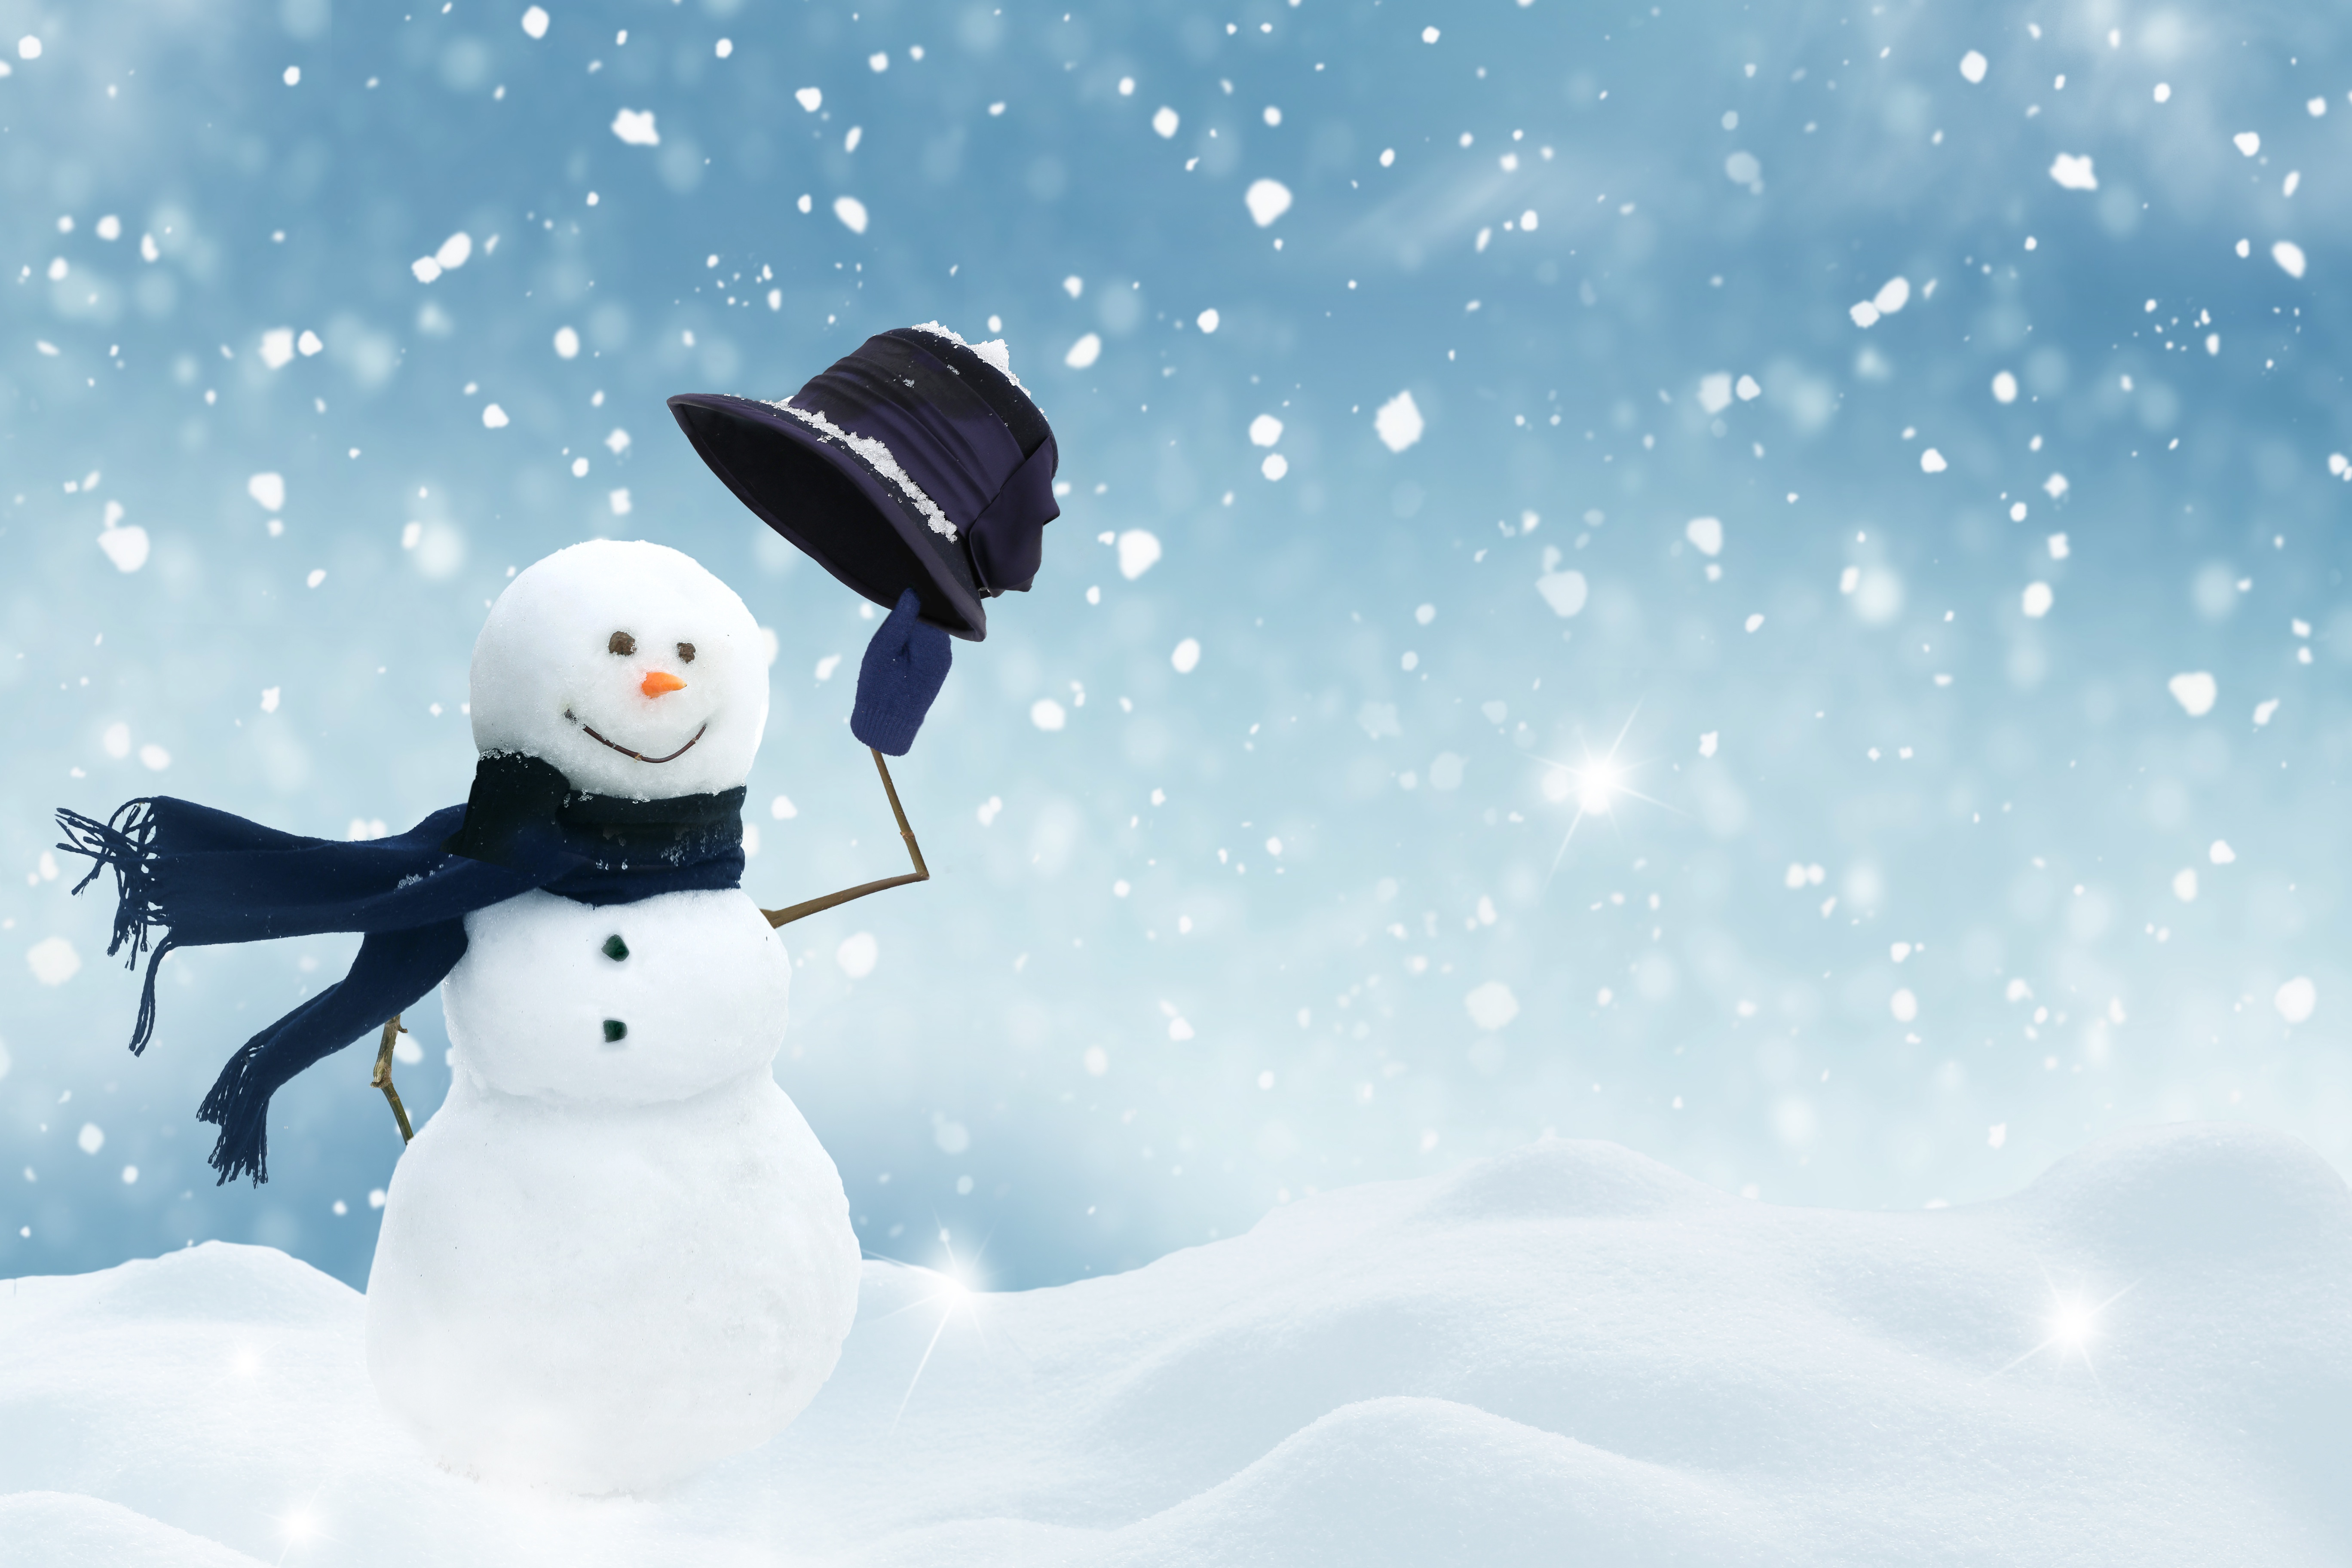 Artistic Snowman 4k Ultra HD Wallpaper